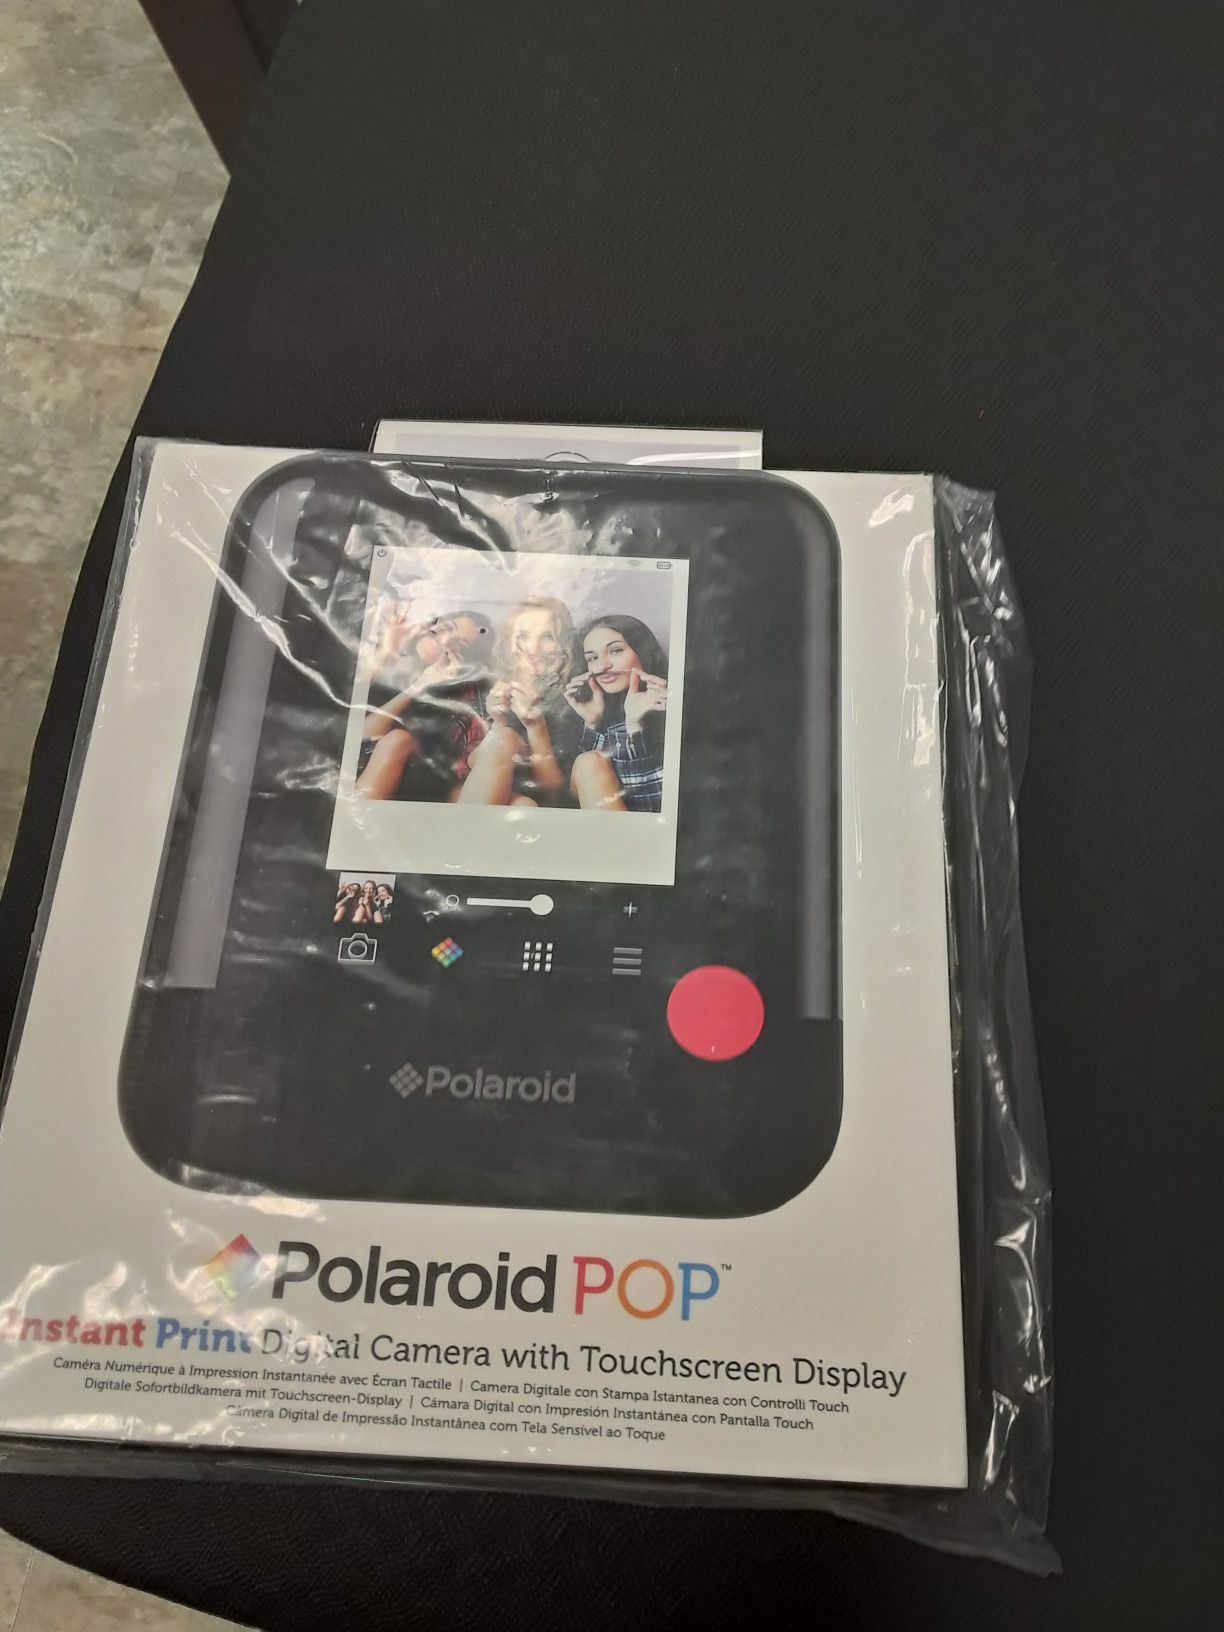 Nice Polaroid digital touchscreen camera!